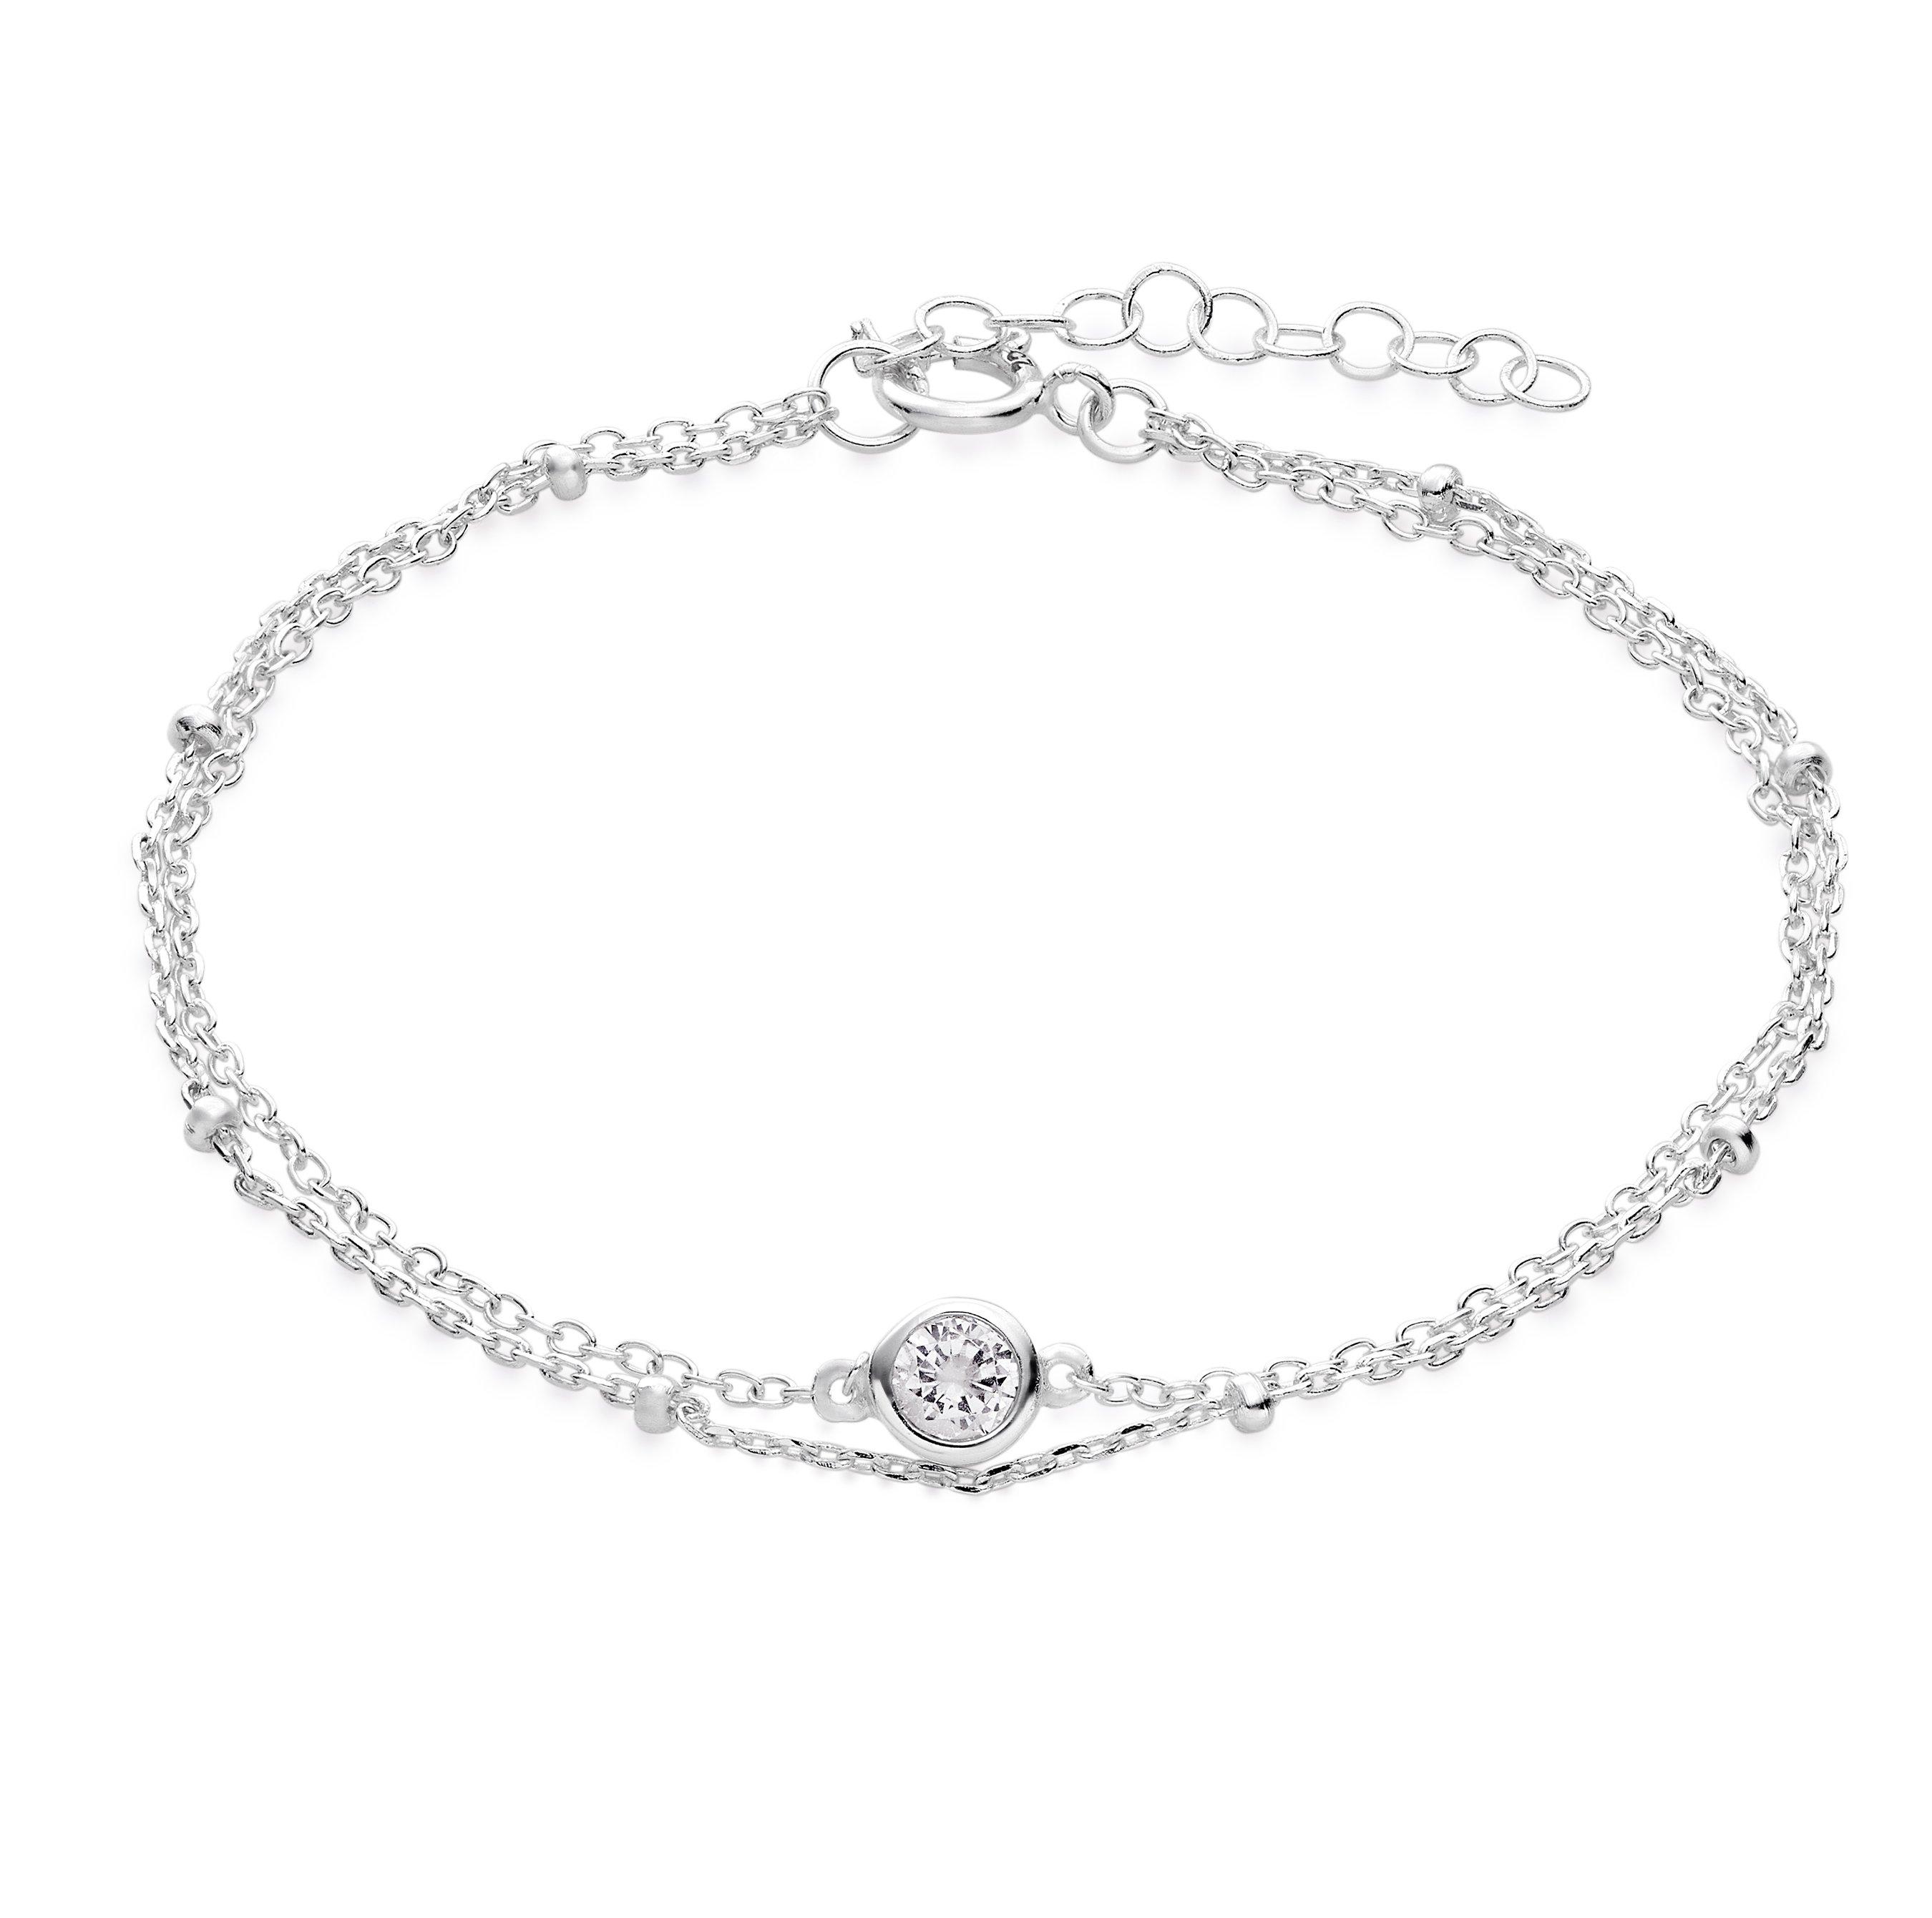 Silver Cubic Zirconia Bracelet | 0136814 | Beaverbrooks the Jewellers